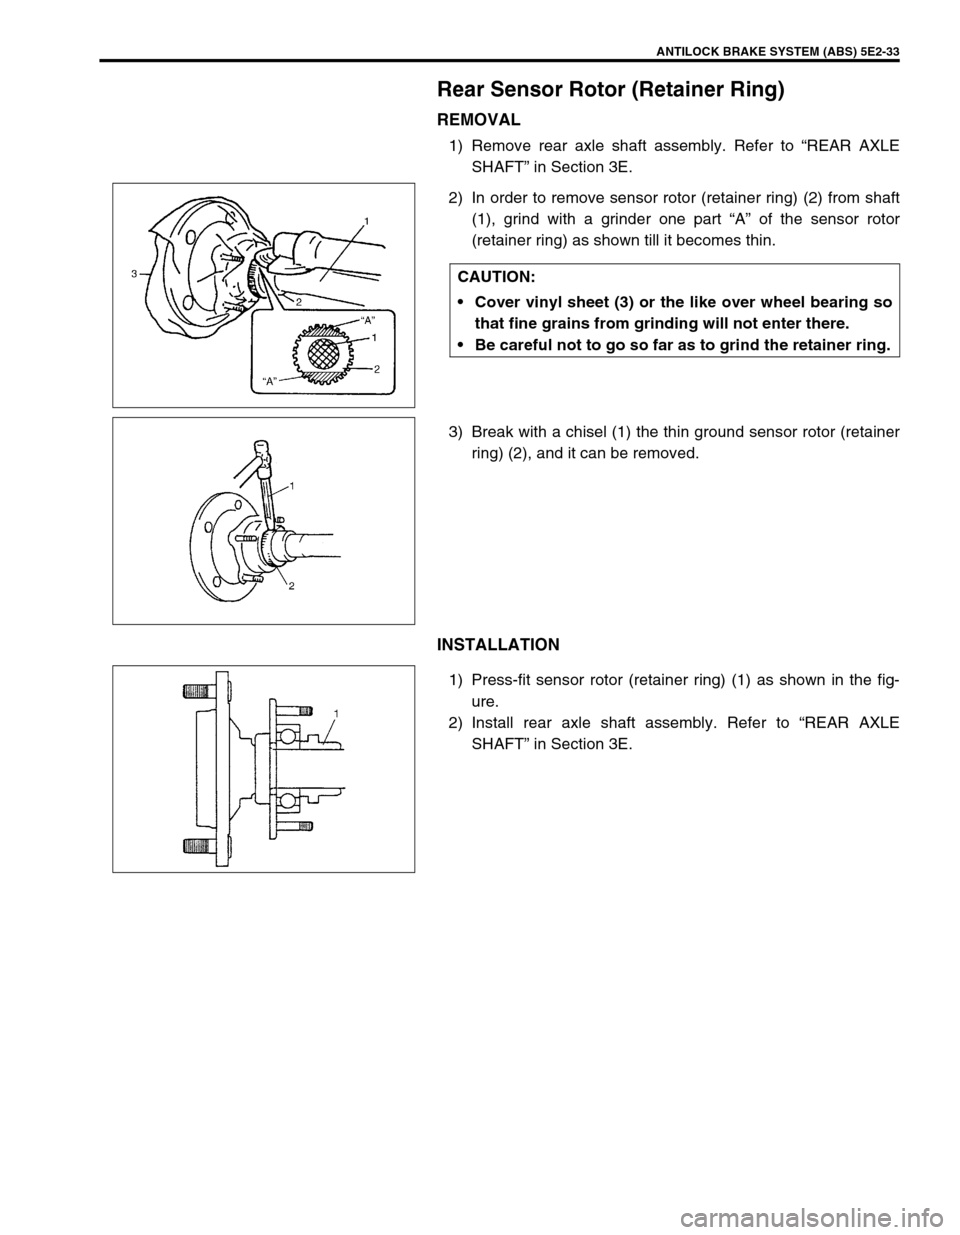 SUZUKI GRAND VITARA 2001 2.G User Guide ANTILOCK BRAKE SYSTEM (ABS) 5E2-33
Rear Sensor Rotor (Retainer Ring)
REMOVAL
1) Remove rear axle shaft assembly. Refer to “REAR AXLE
SHAFT” in Section 3E.
2) In order to remove sensor rotor (retai